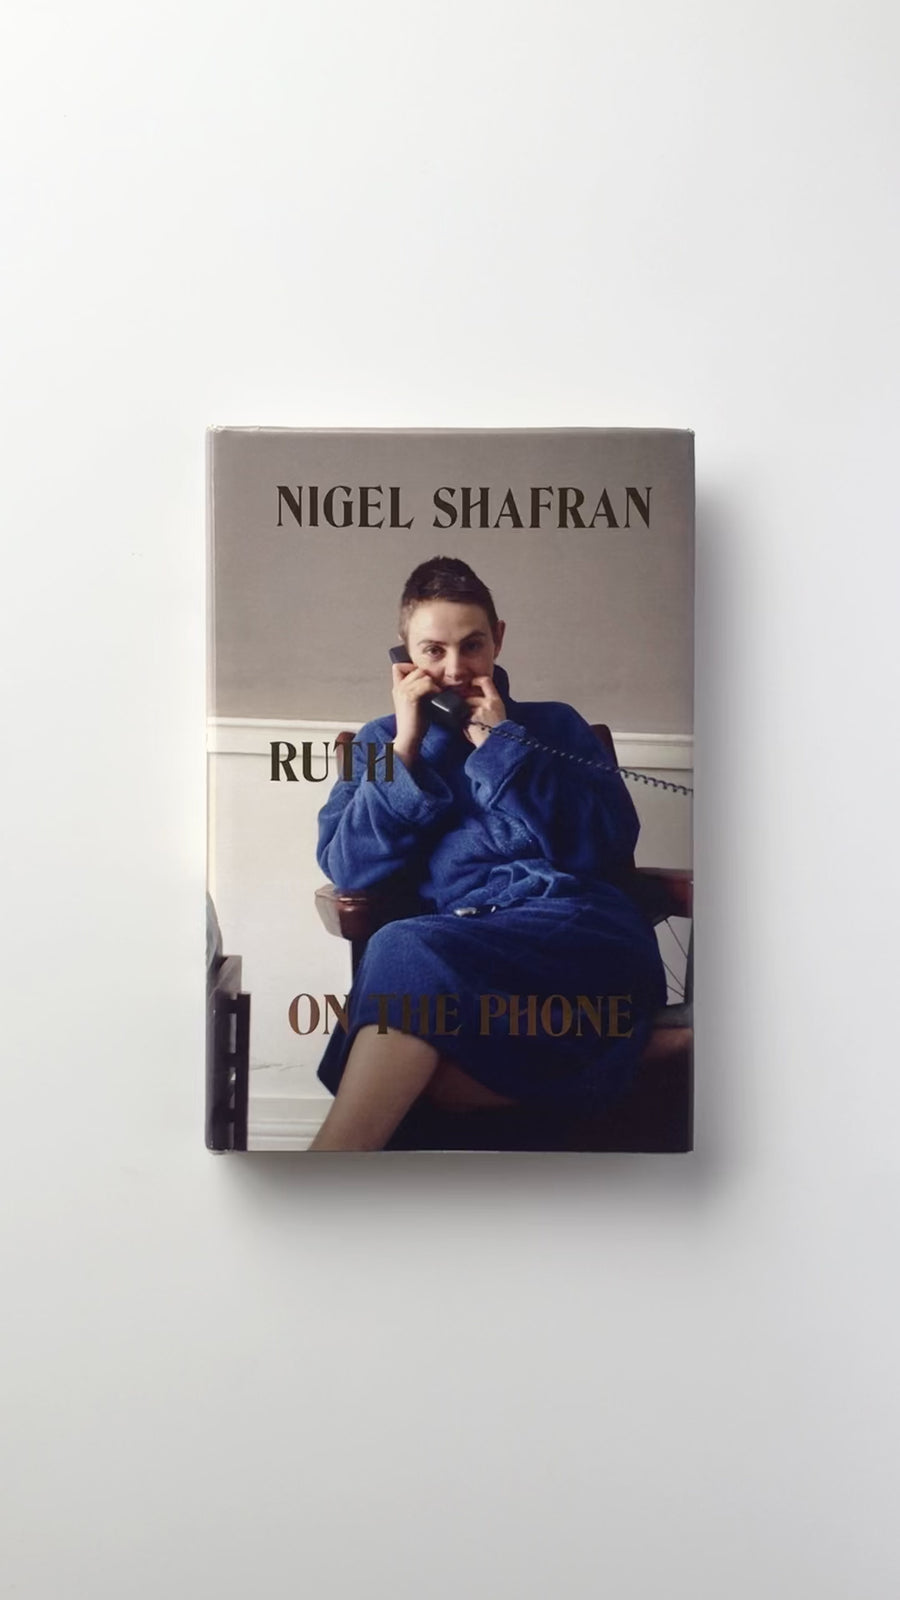 Ruth on the phone by Nigel Shafran